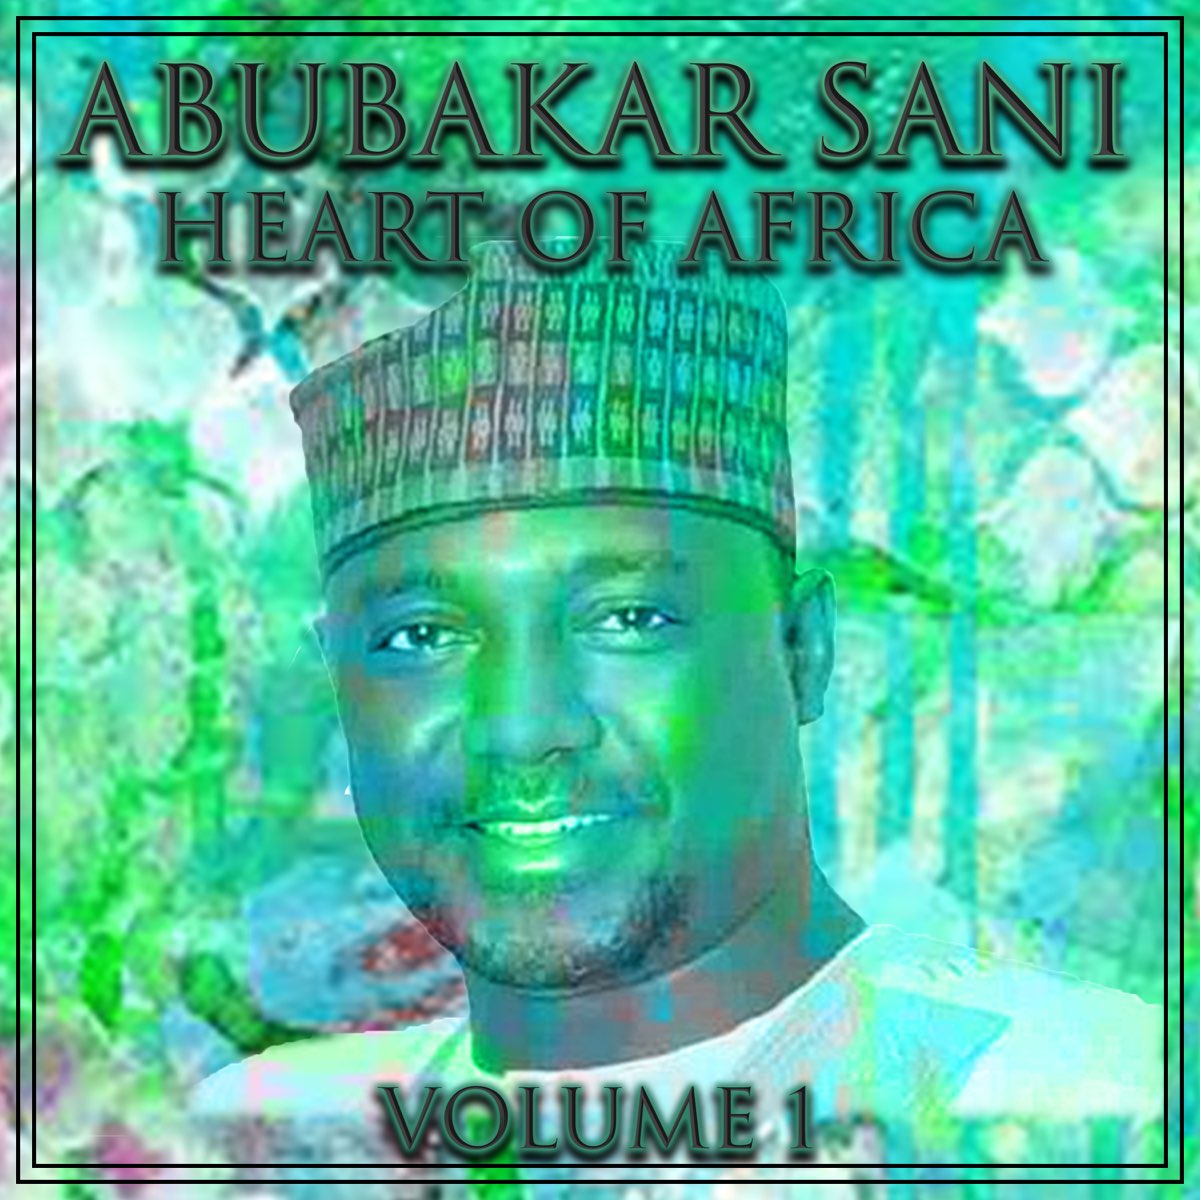 Heart of Africa, Vol. 1 by Abubakar Sani on Apple Music